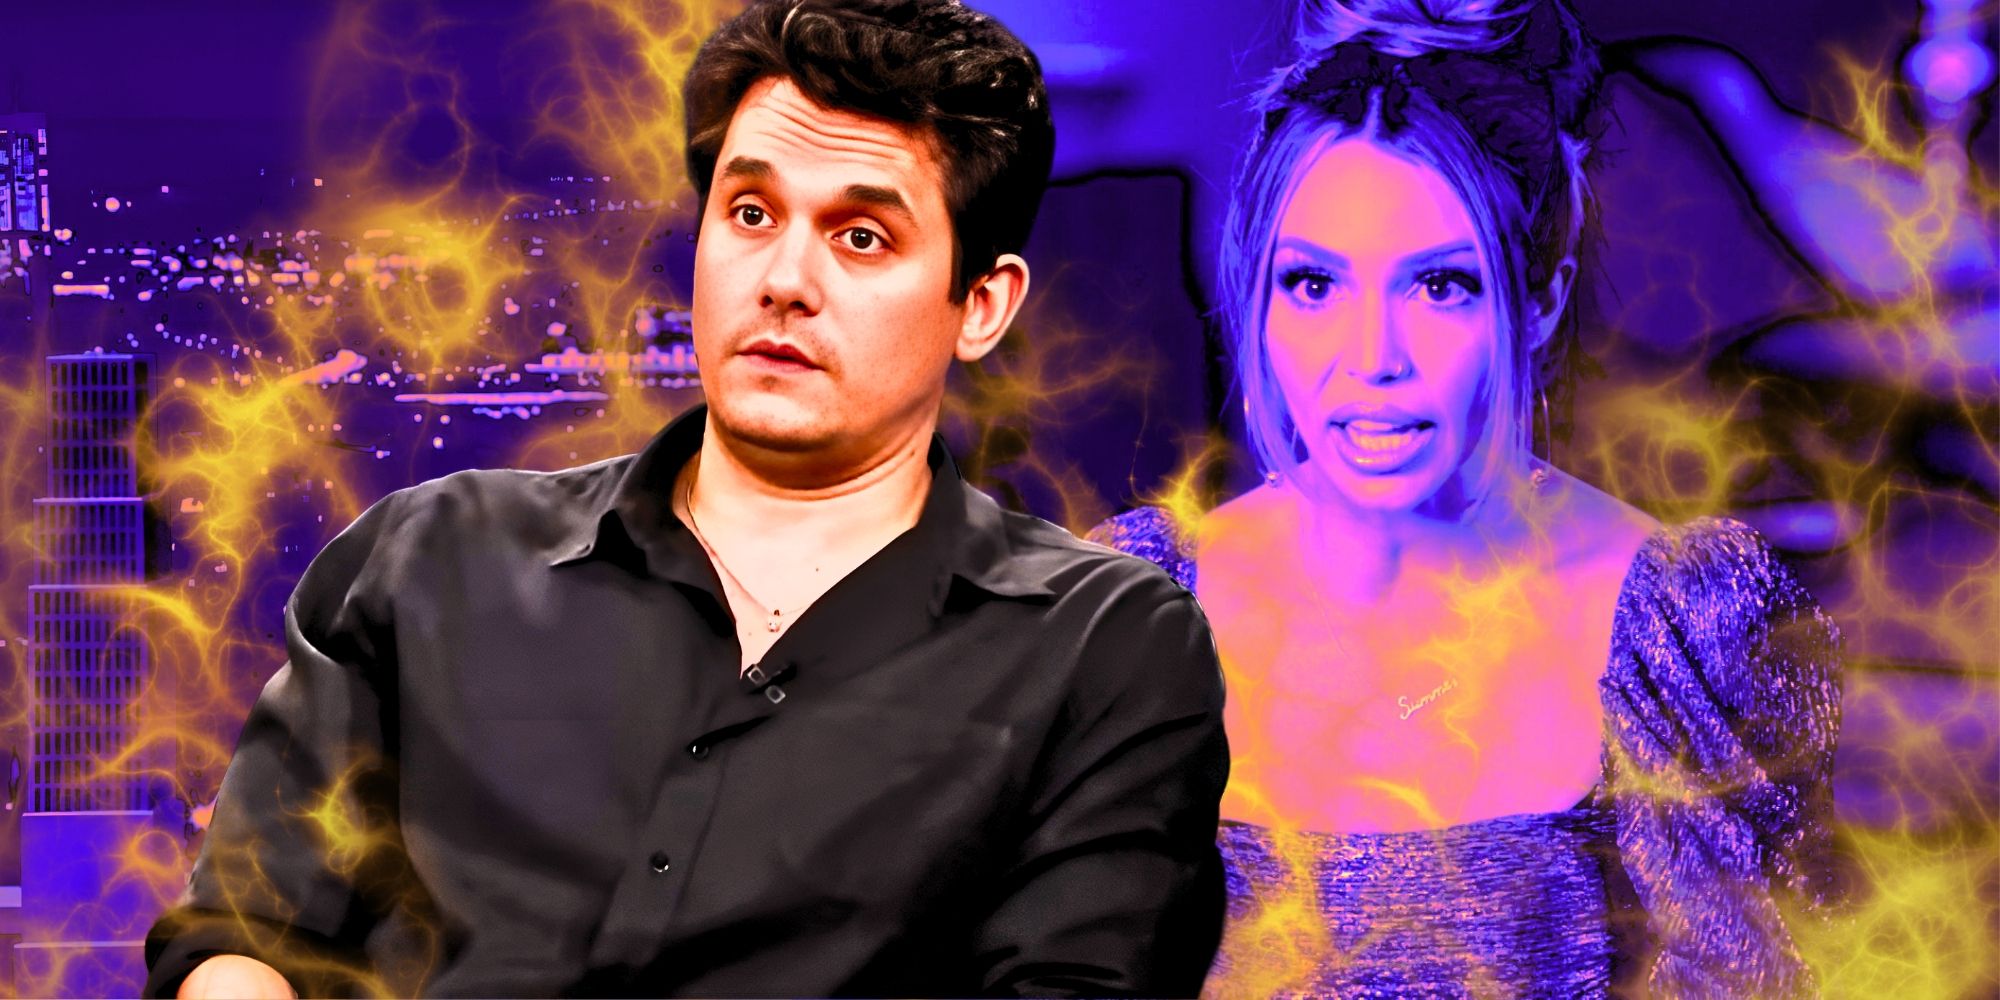 John Mayer and Vanderpump Rules’ Scheana Shay looking shocked